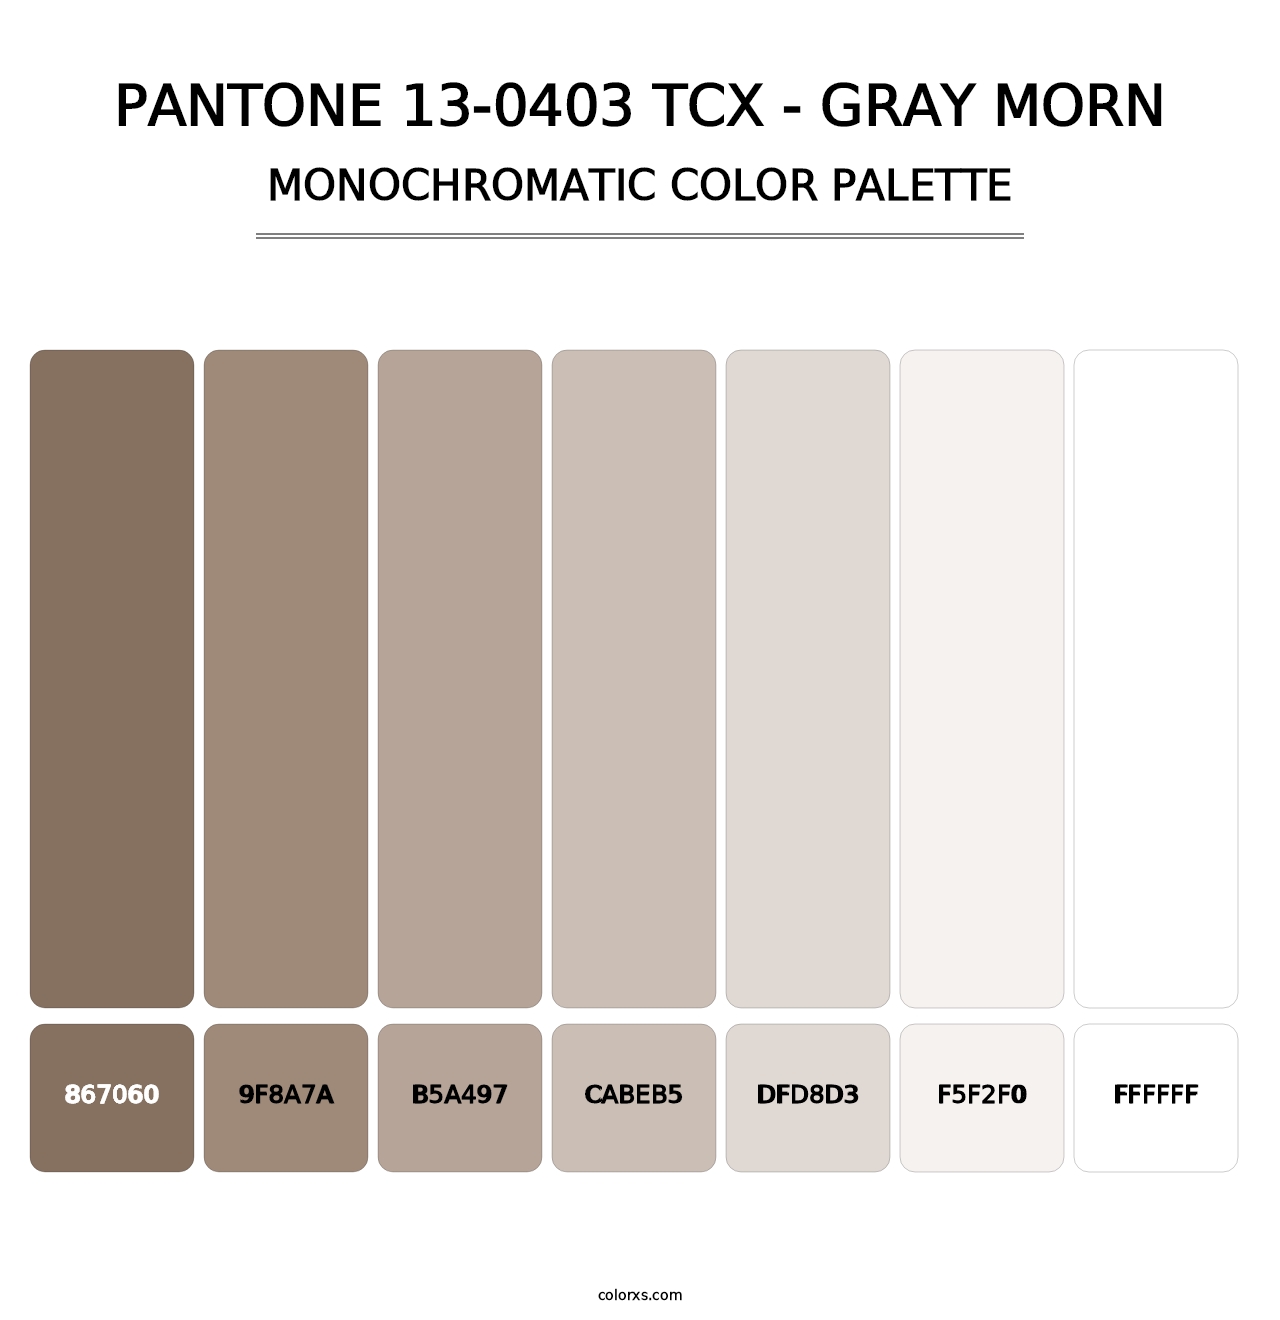 PANTONE 13-0403 TCX - Gray Morn - Monochromatic Color Palette